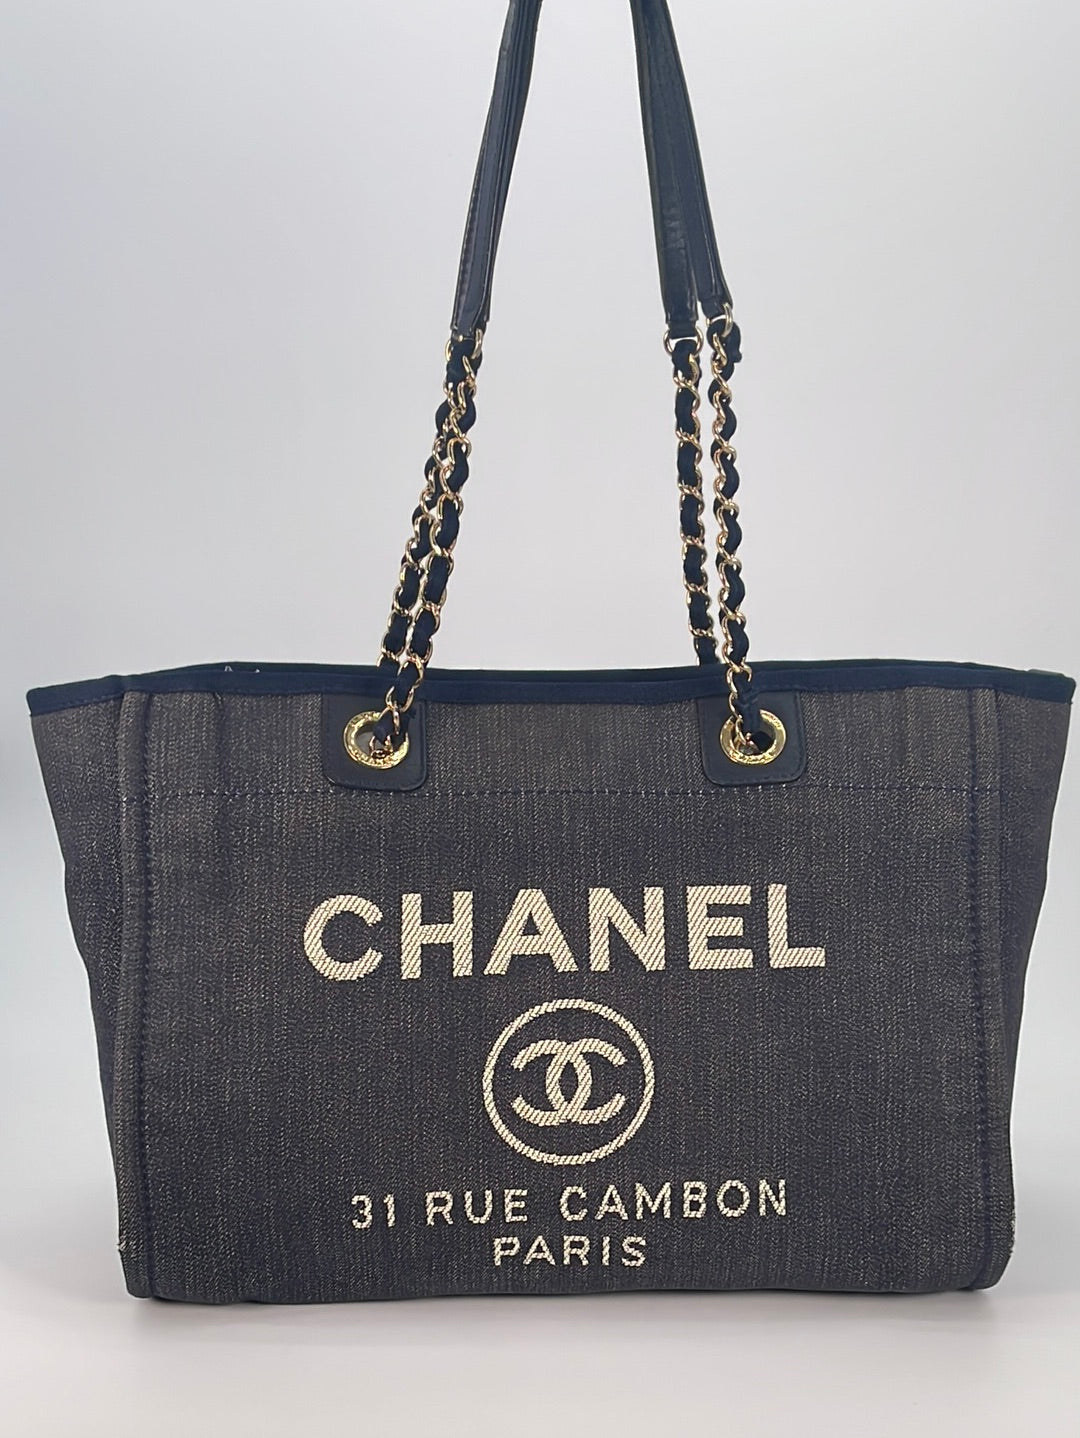 31 Rue Cambon Blue Deauville Shoulder Bag Tote (Authentic Pre